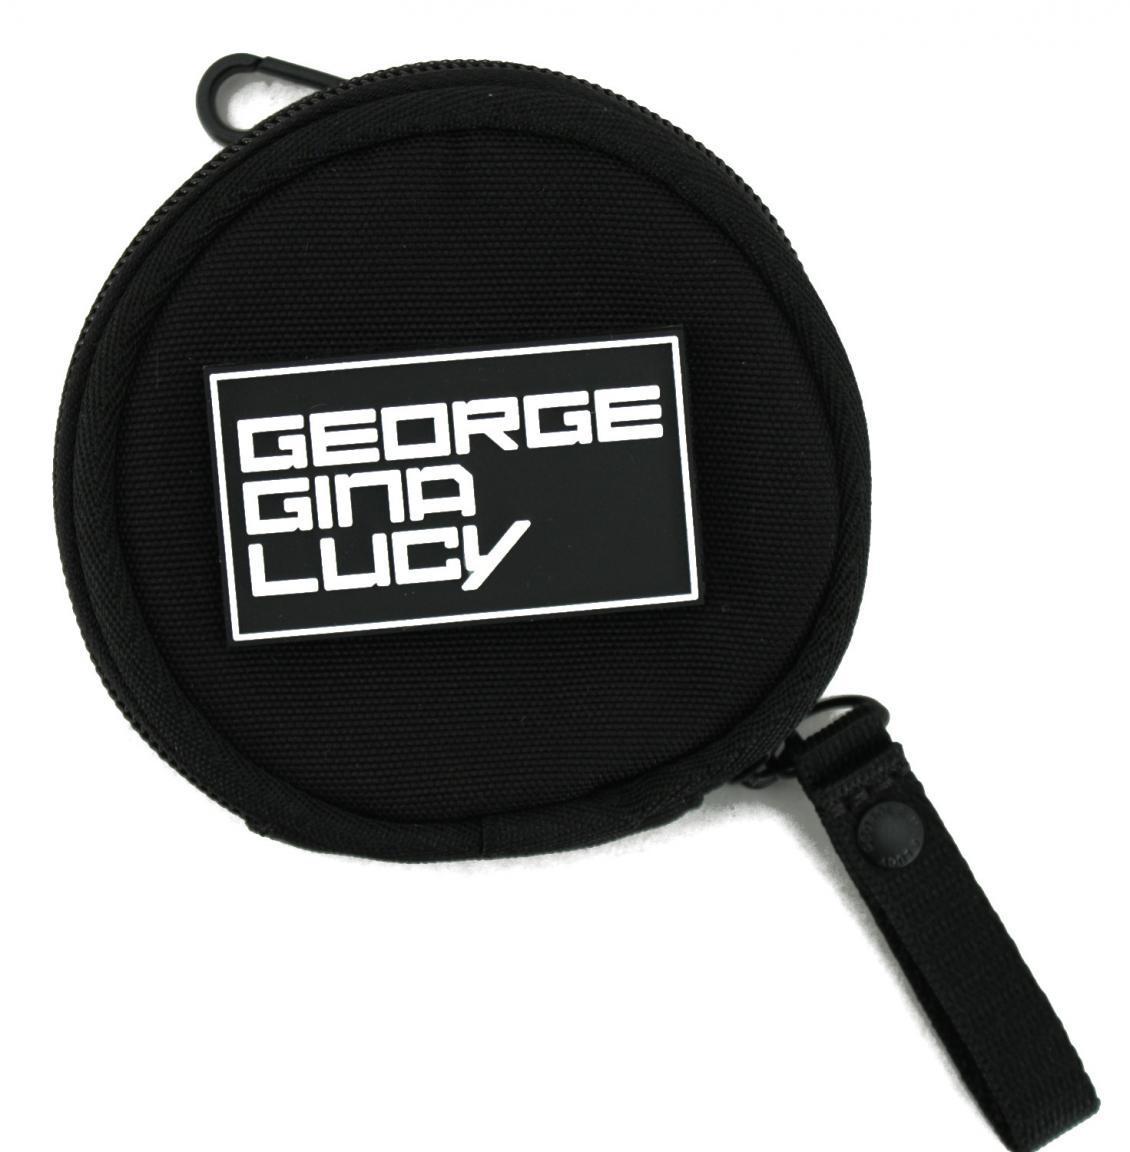 Clutch George Gina & Lucy 24U All in Black GG&L schwarz abnehmbare Geldbörse